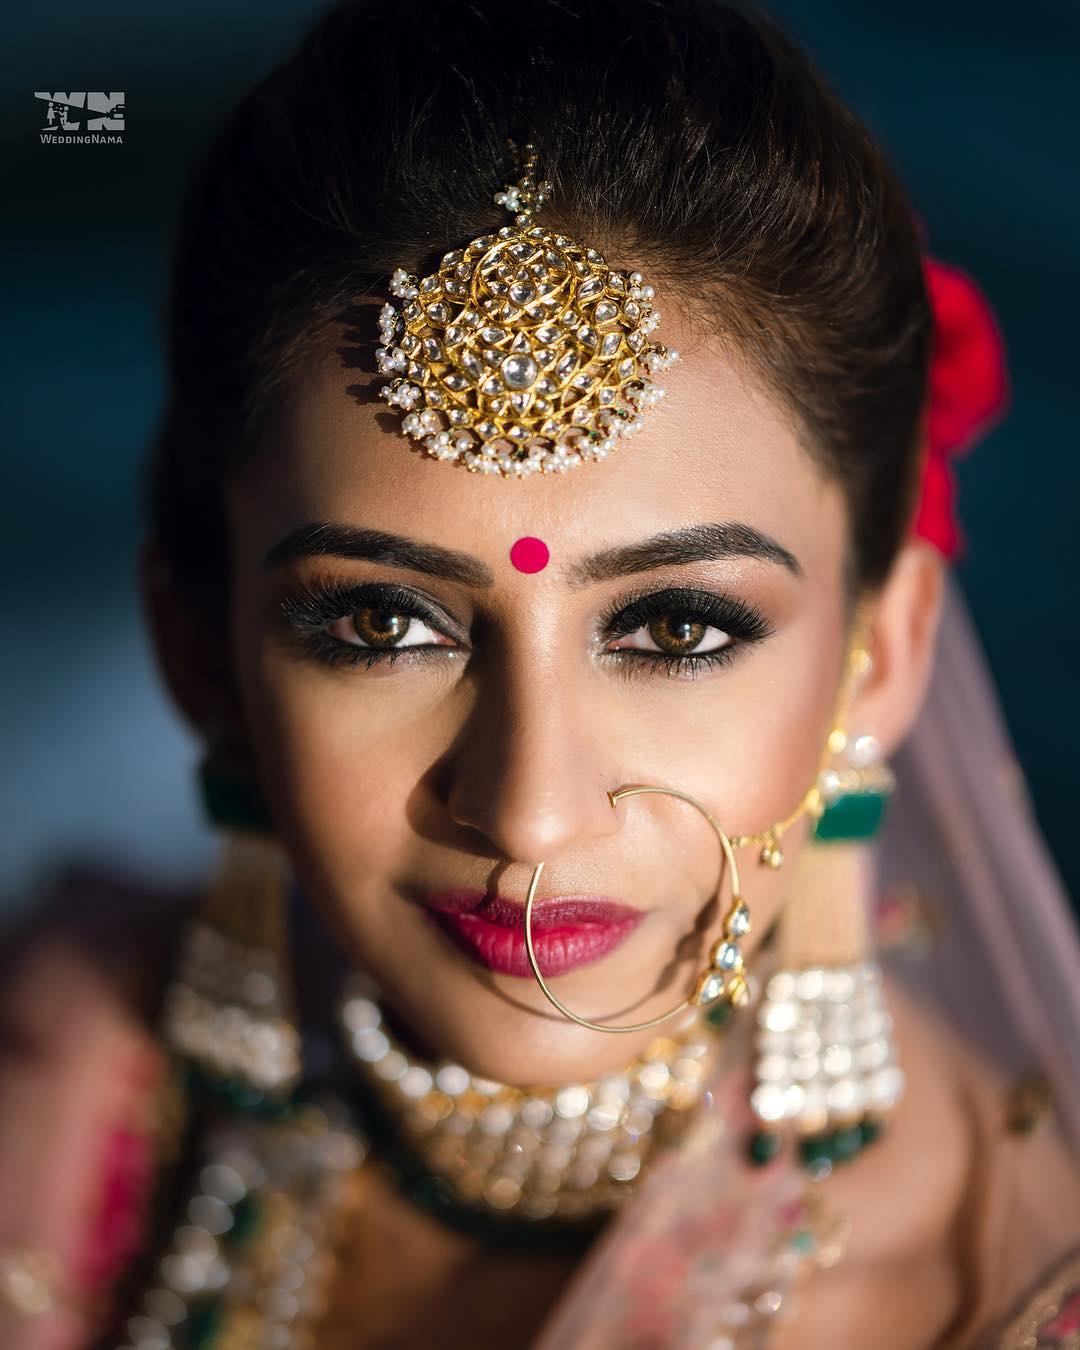 jodhpuri | Indian bride photography poses, Indian bride poses, Indian  wedding poses